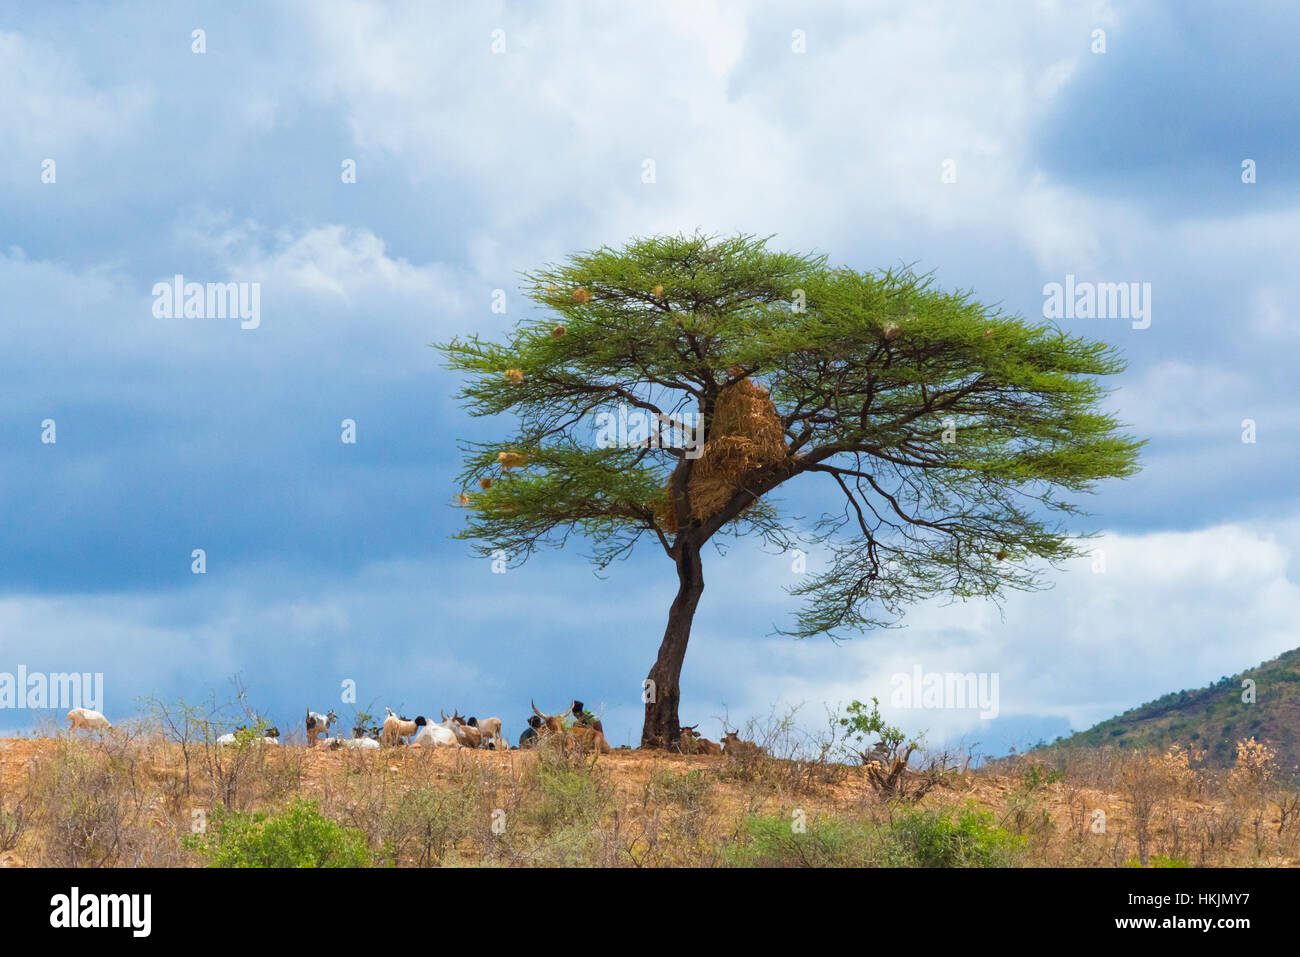 Herding cattle under an acacia tree with bird nests, Ethiopia Stock Photo